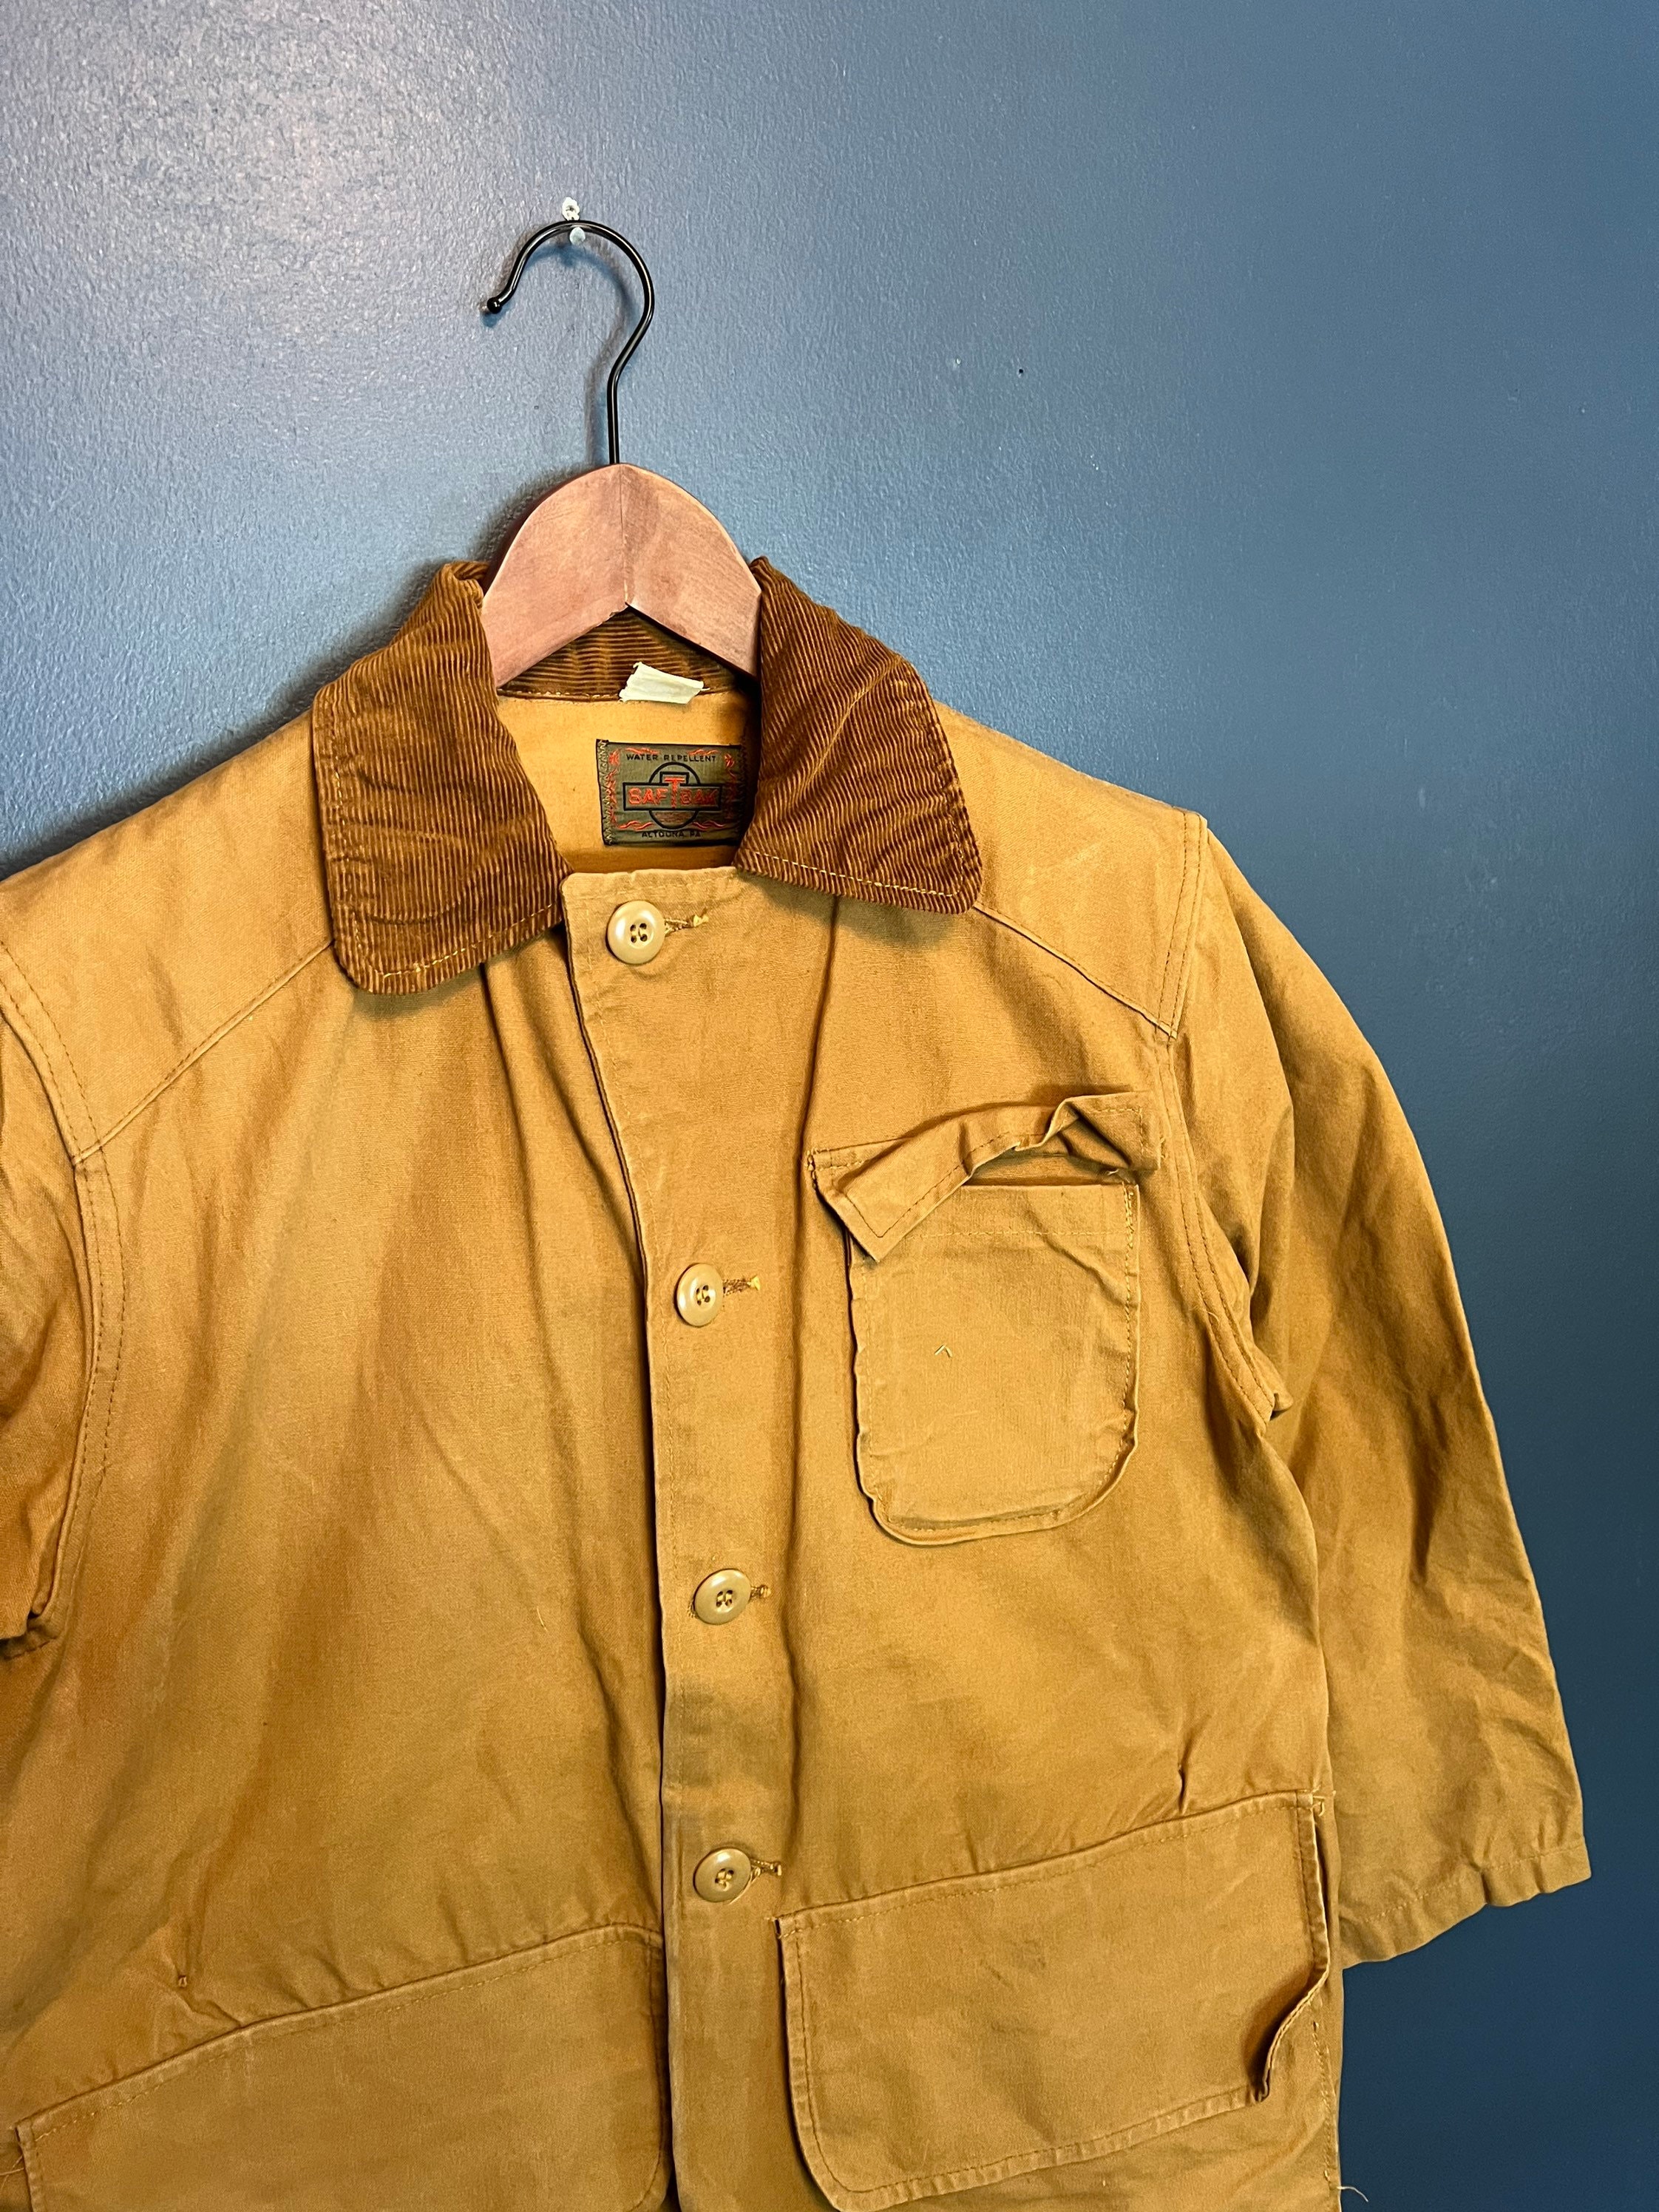 Vintage 70’s SAFTBAK Tan Canvas Hunting Jacket Size Small USA Made